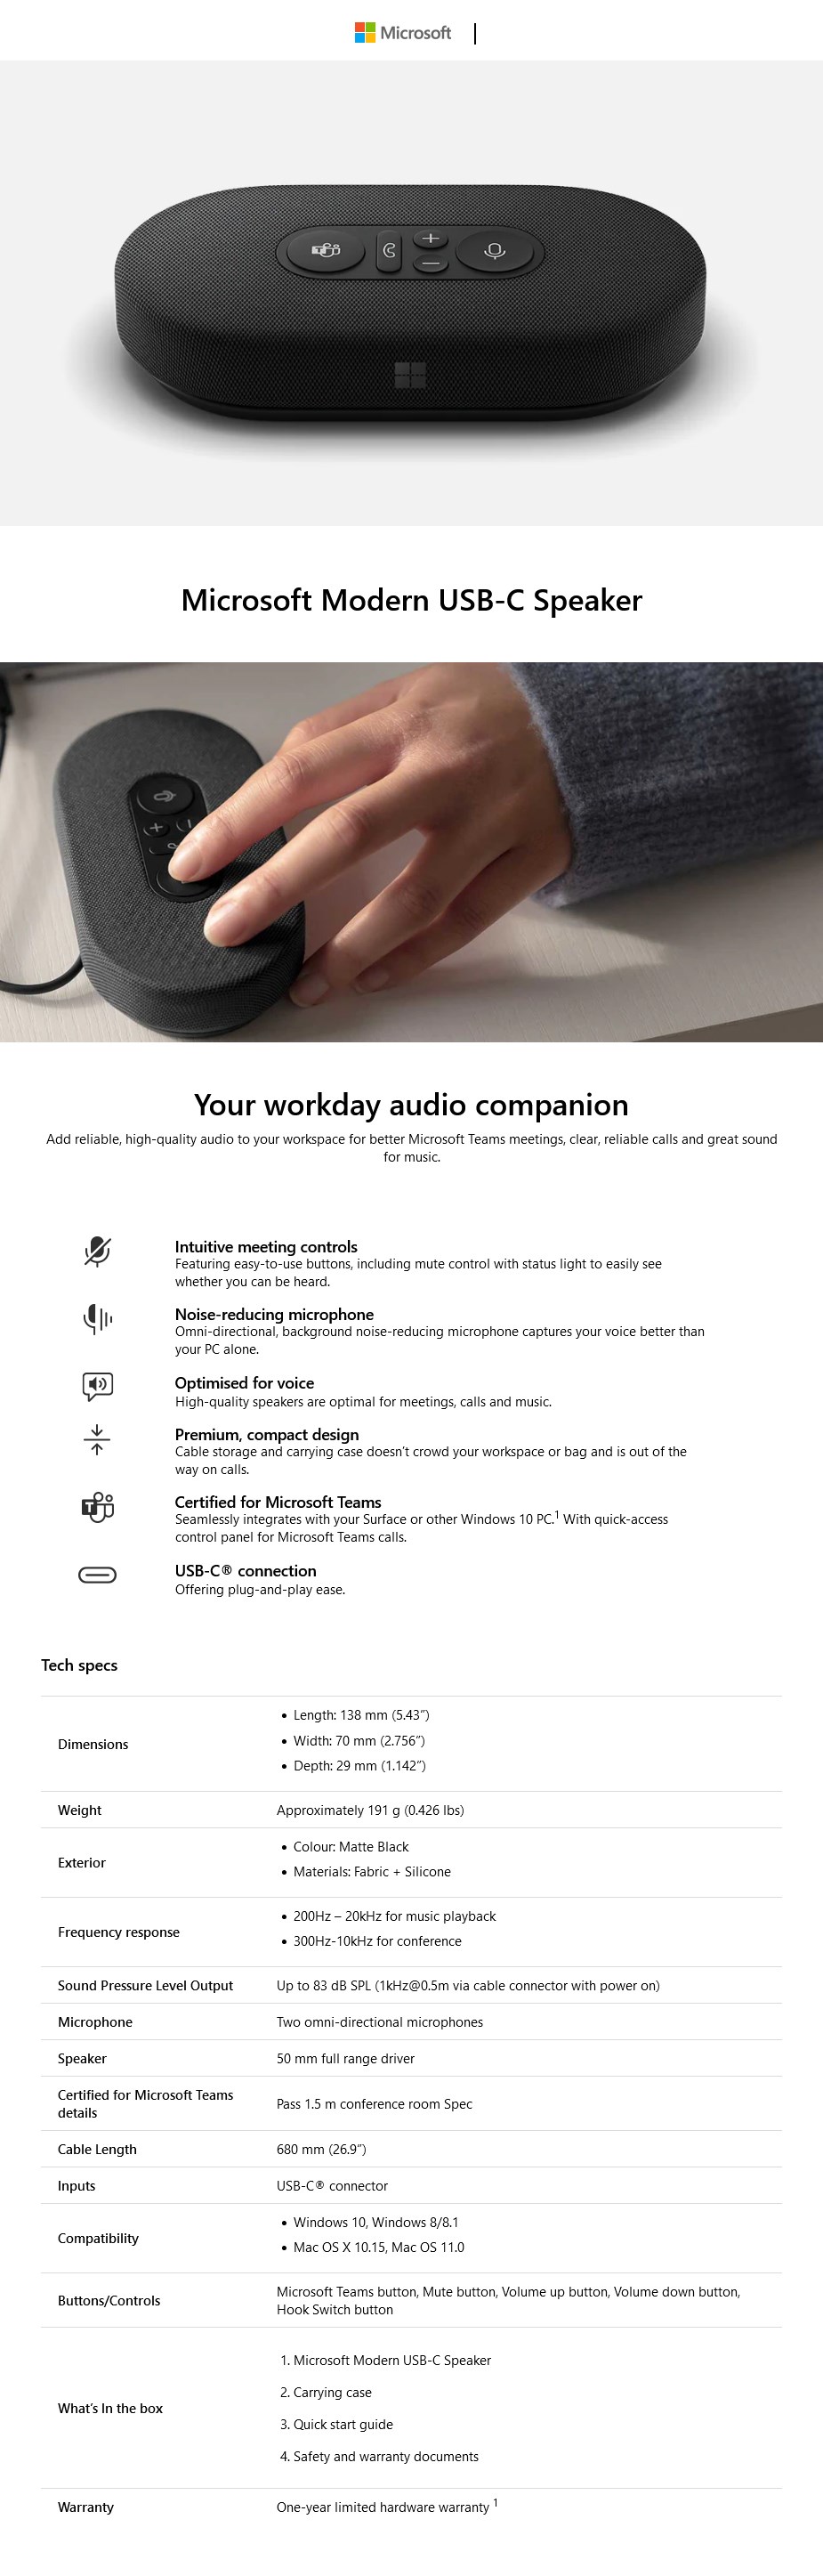 Microsoft Modern USB-C Speaker - Overview 1